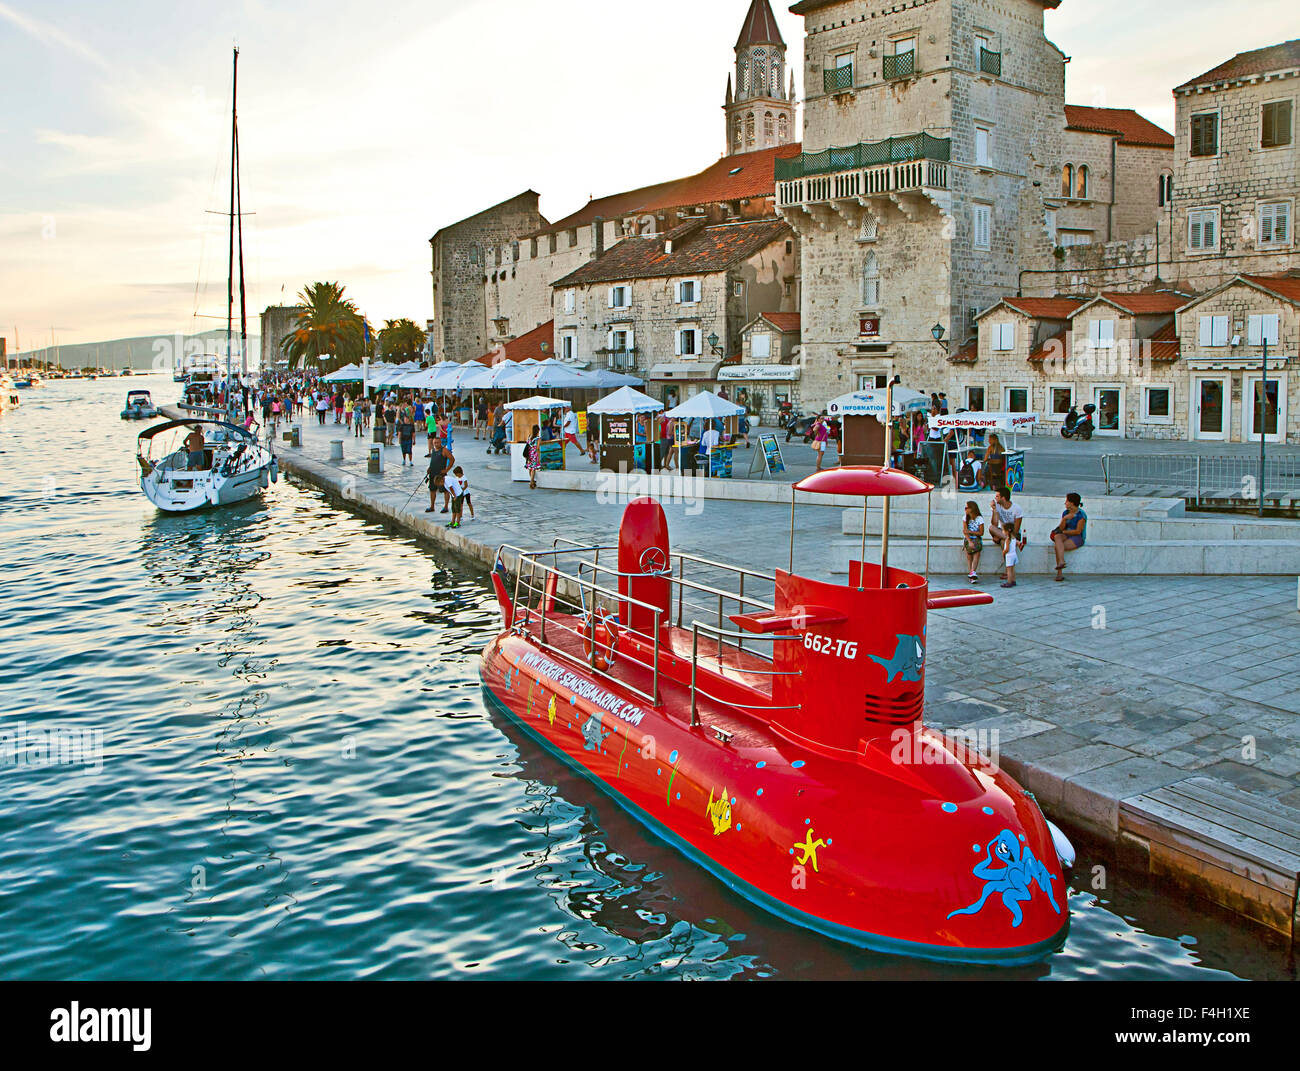 Trogir, Croatia - sea promenade with red semi-submarine moored at waterfront. Stock Photo